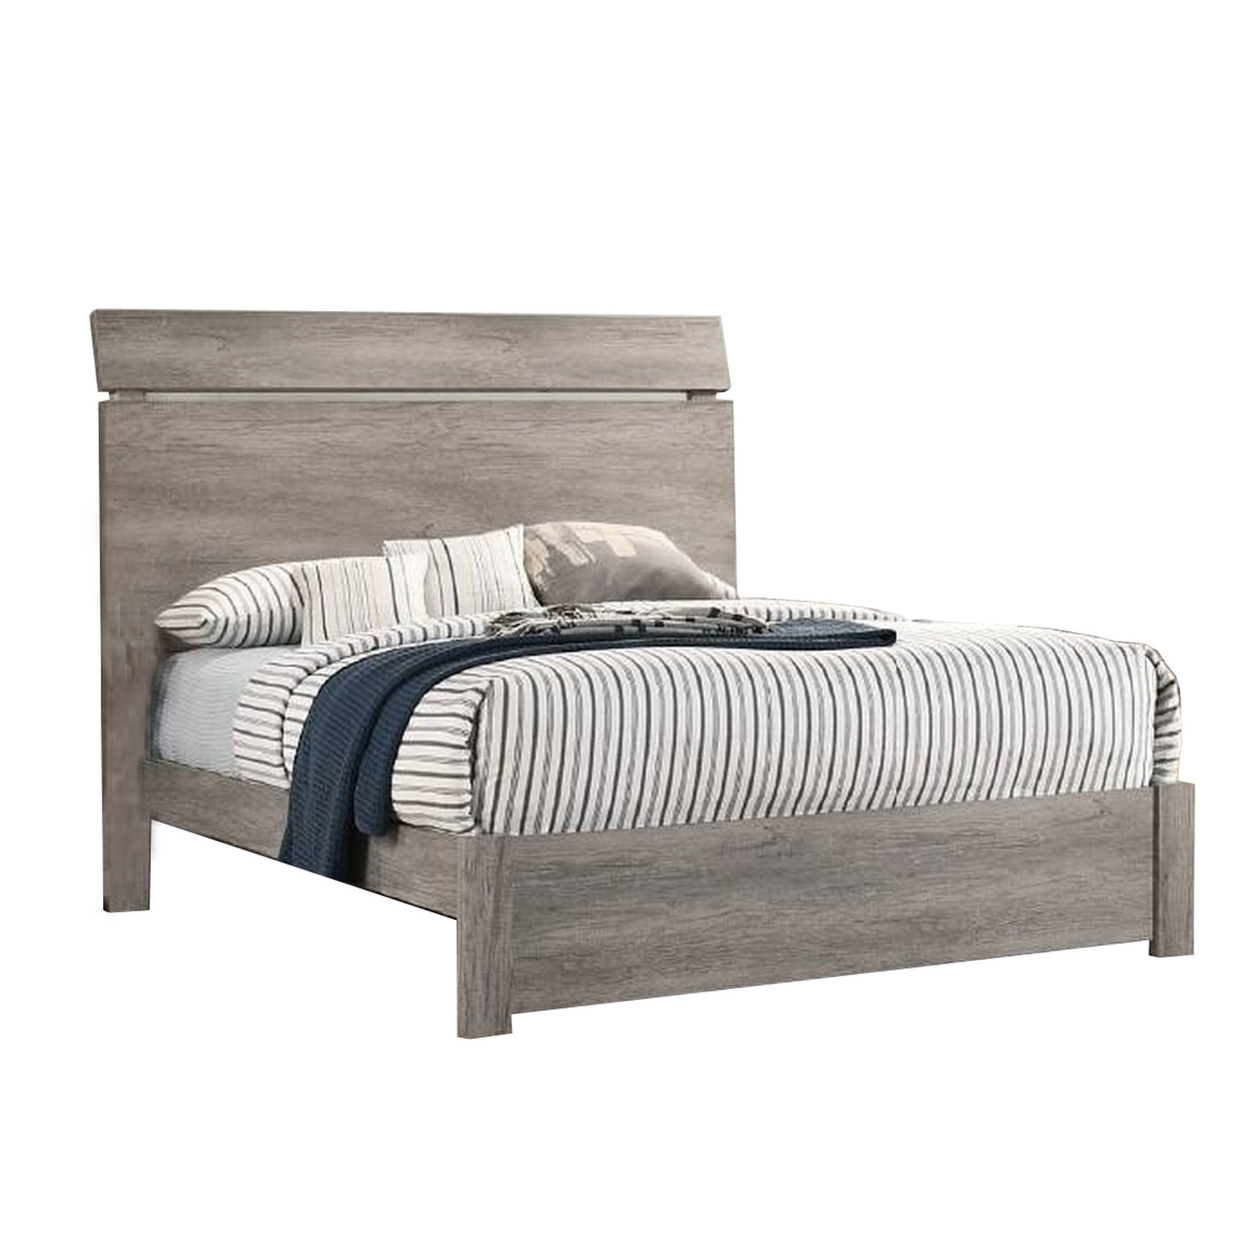 Posy Platform Queen Size Bed With Split Headboard, Distressed Gray Wood- Saltoro Sherpi